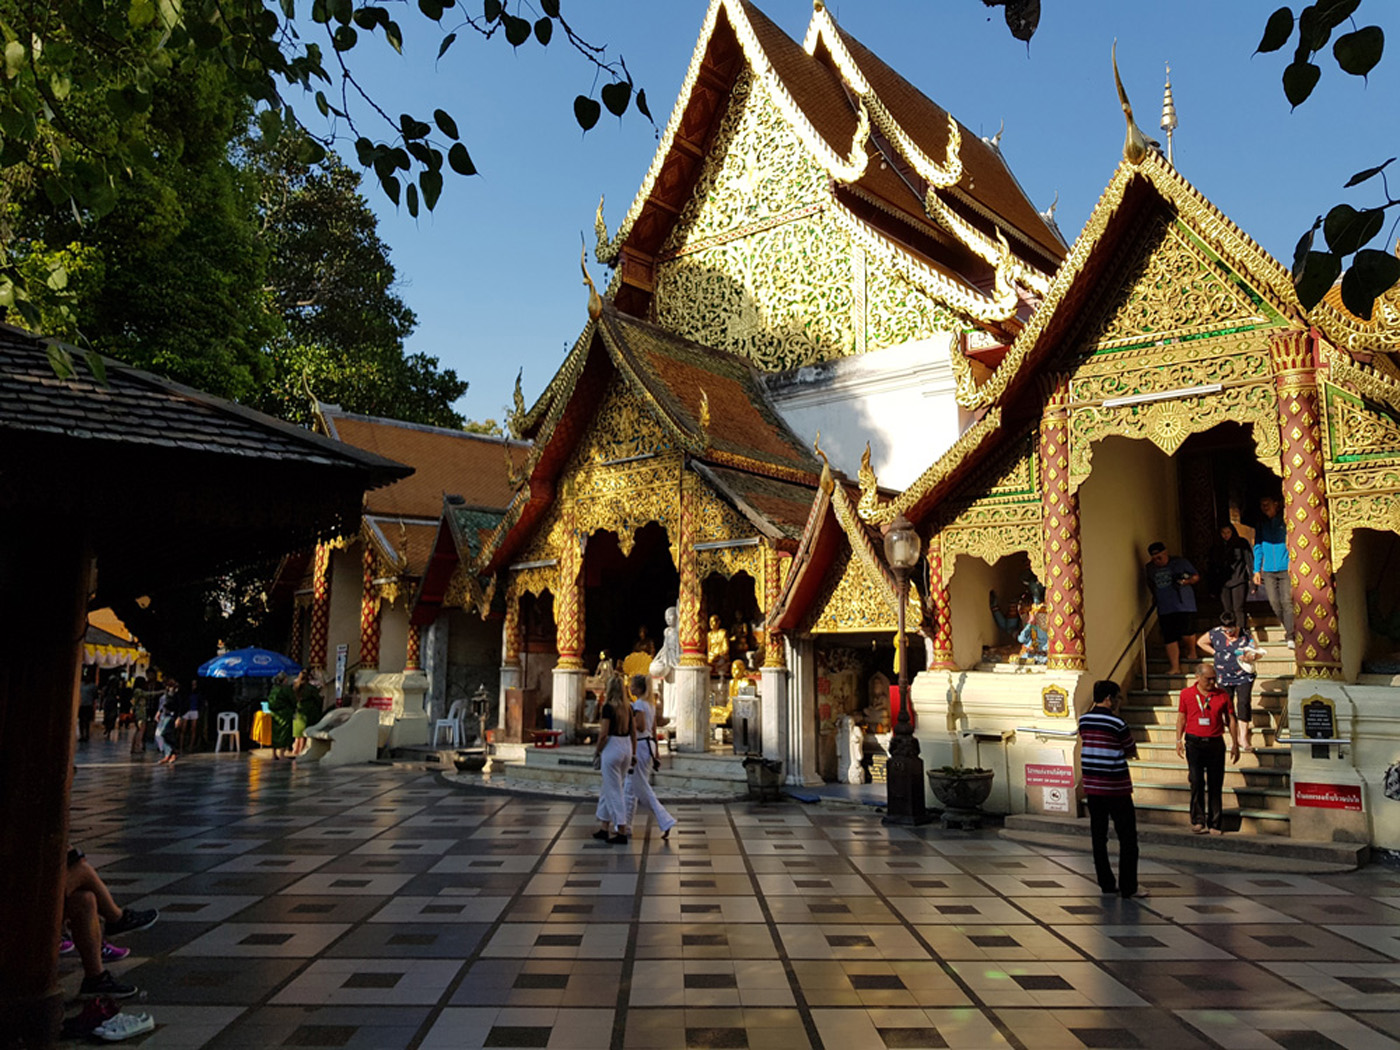 An unforgettable week in Chiang Mai, Thailand